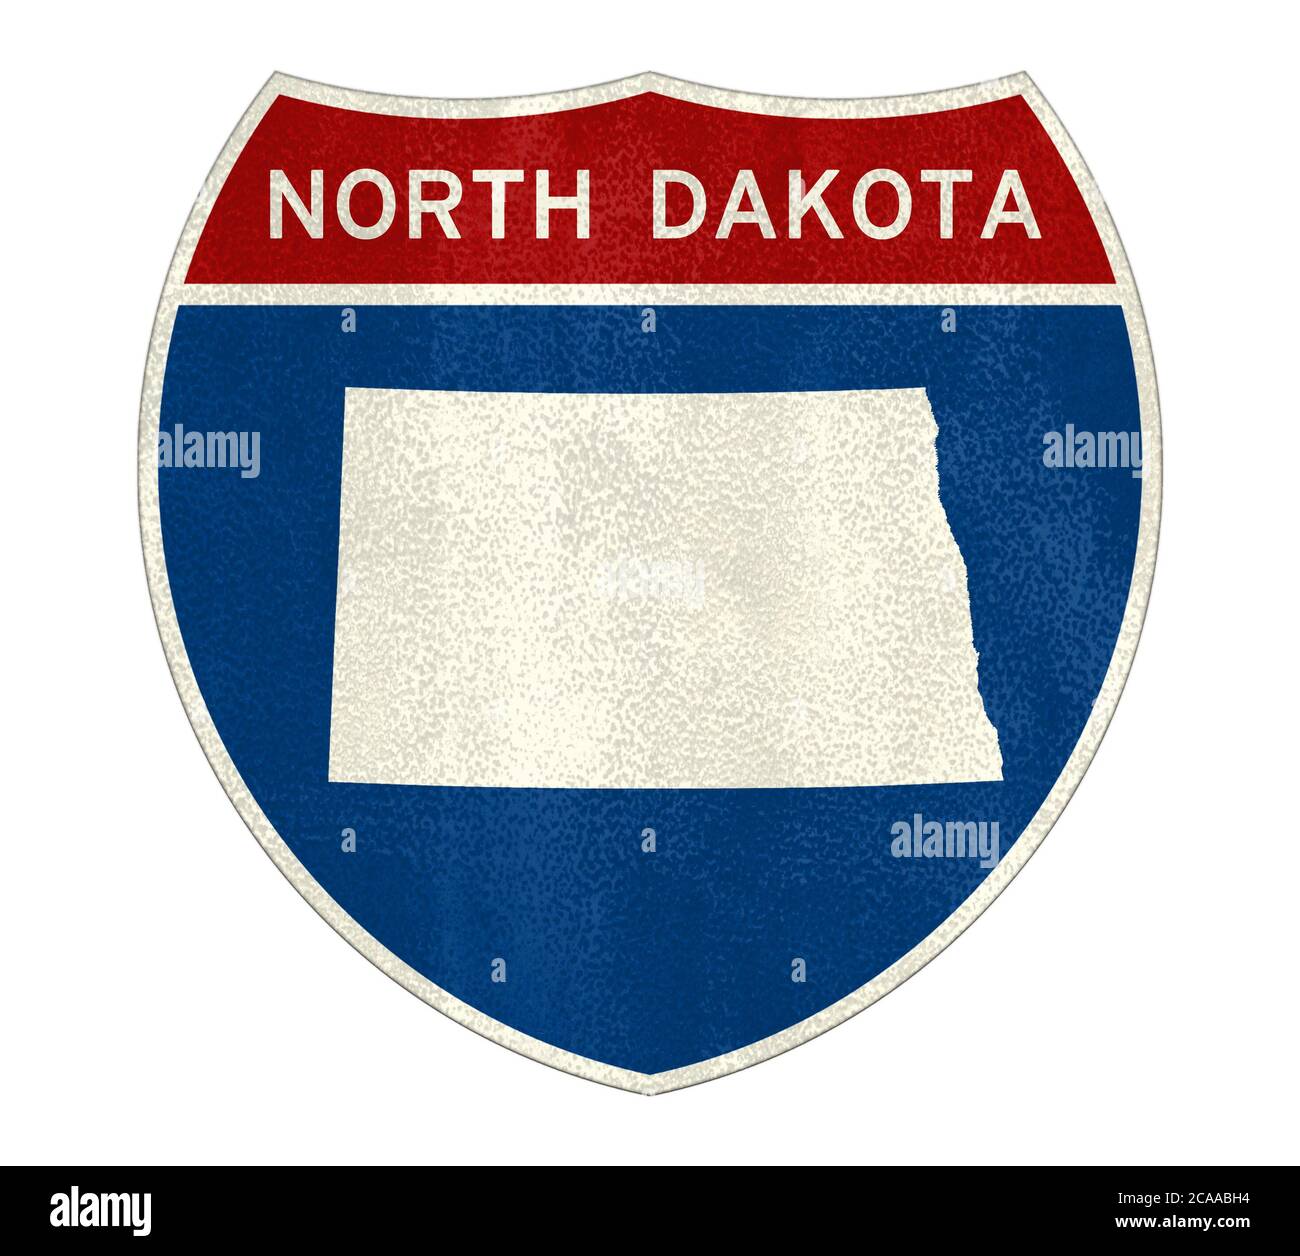 North Dakota State Interstate road sign Stock Photo